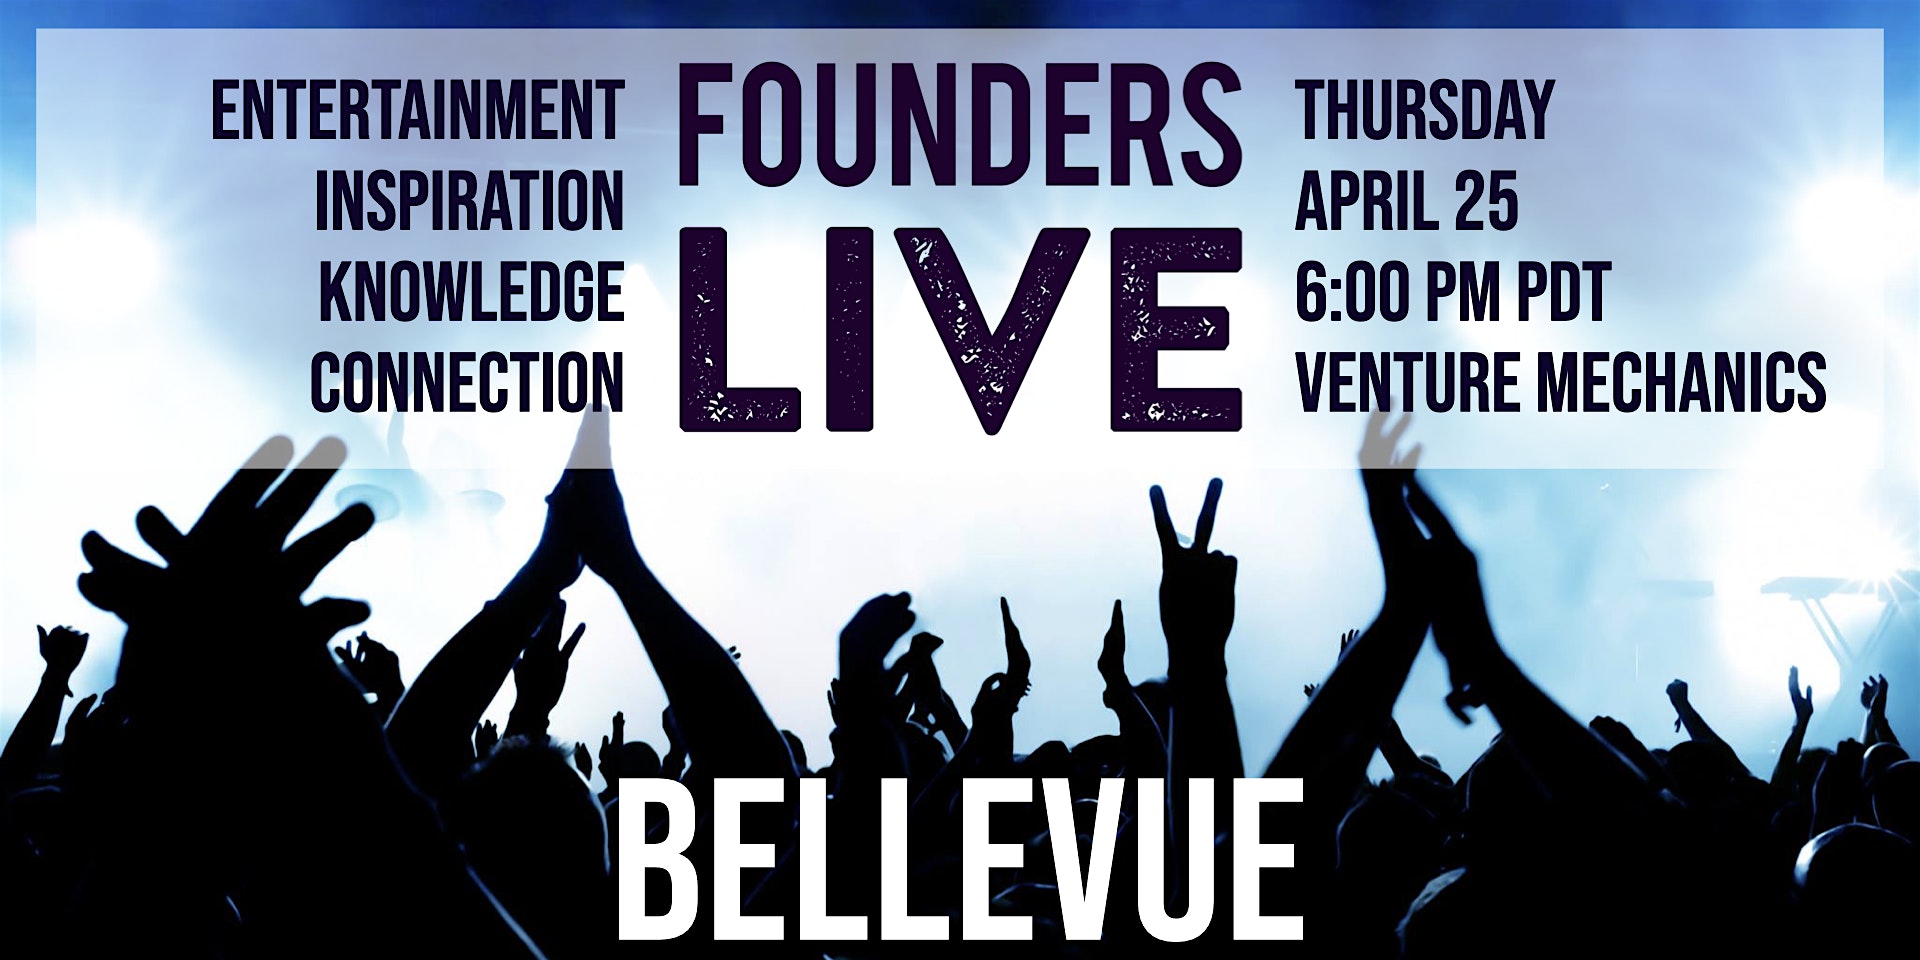 Founders Live Bellevue